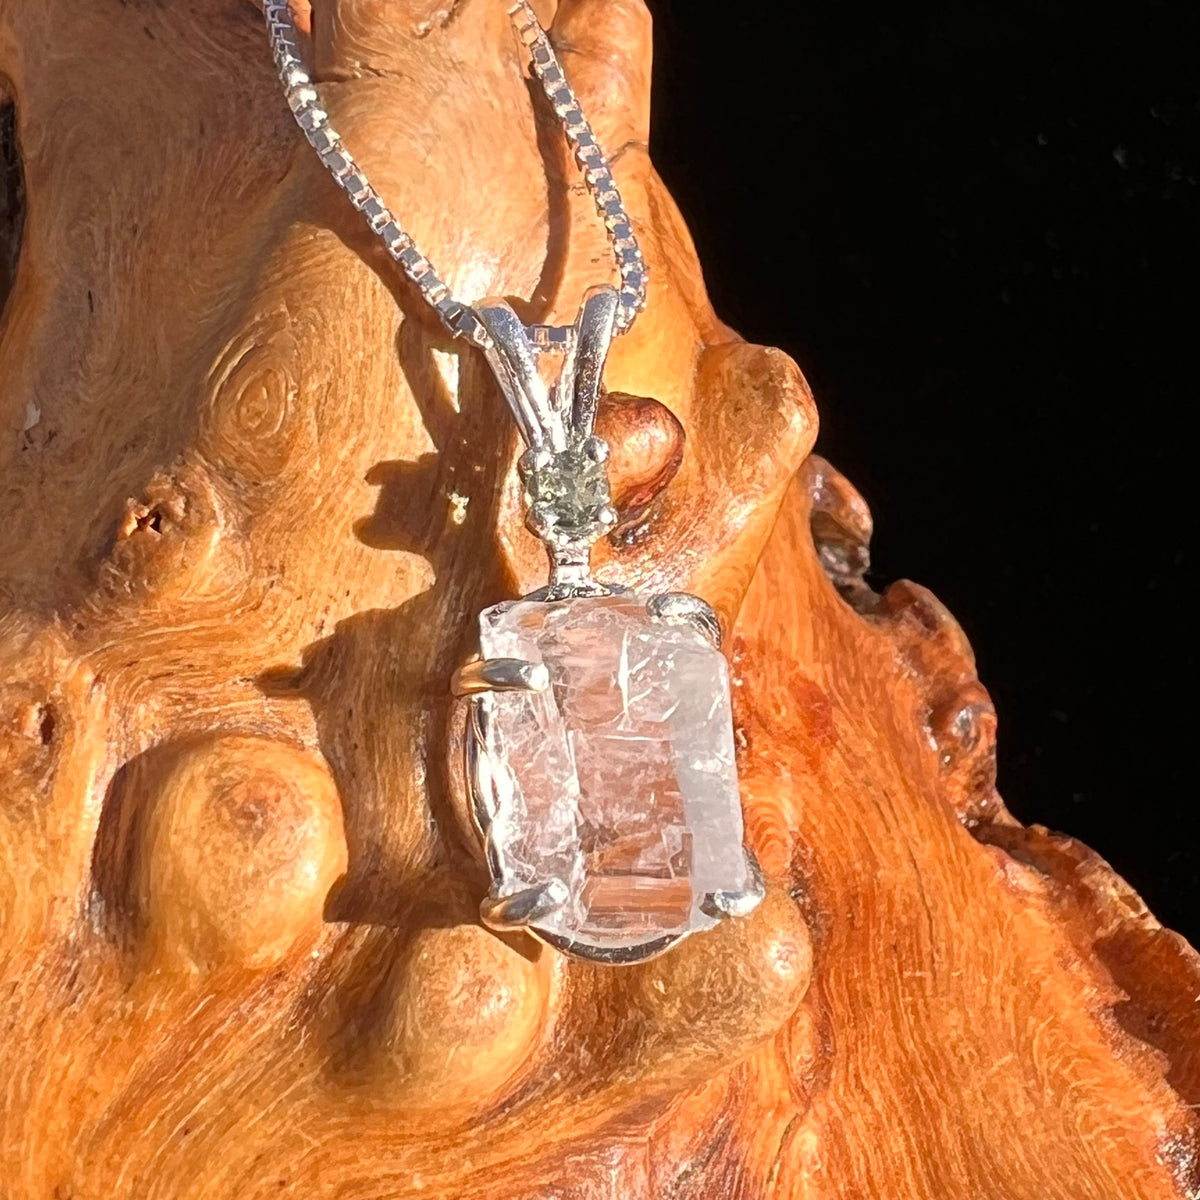 Petalite & Moldavite Pendant Necklace Sterling #3574-Moldavite Life